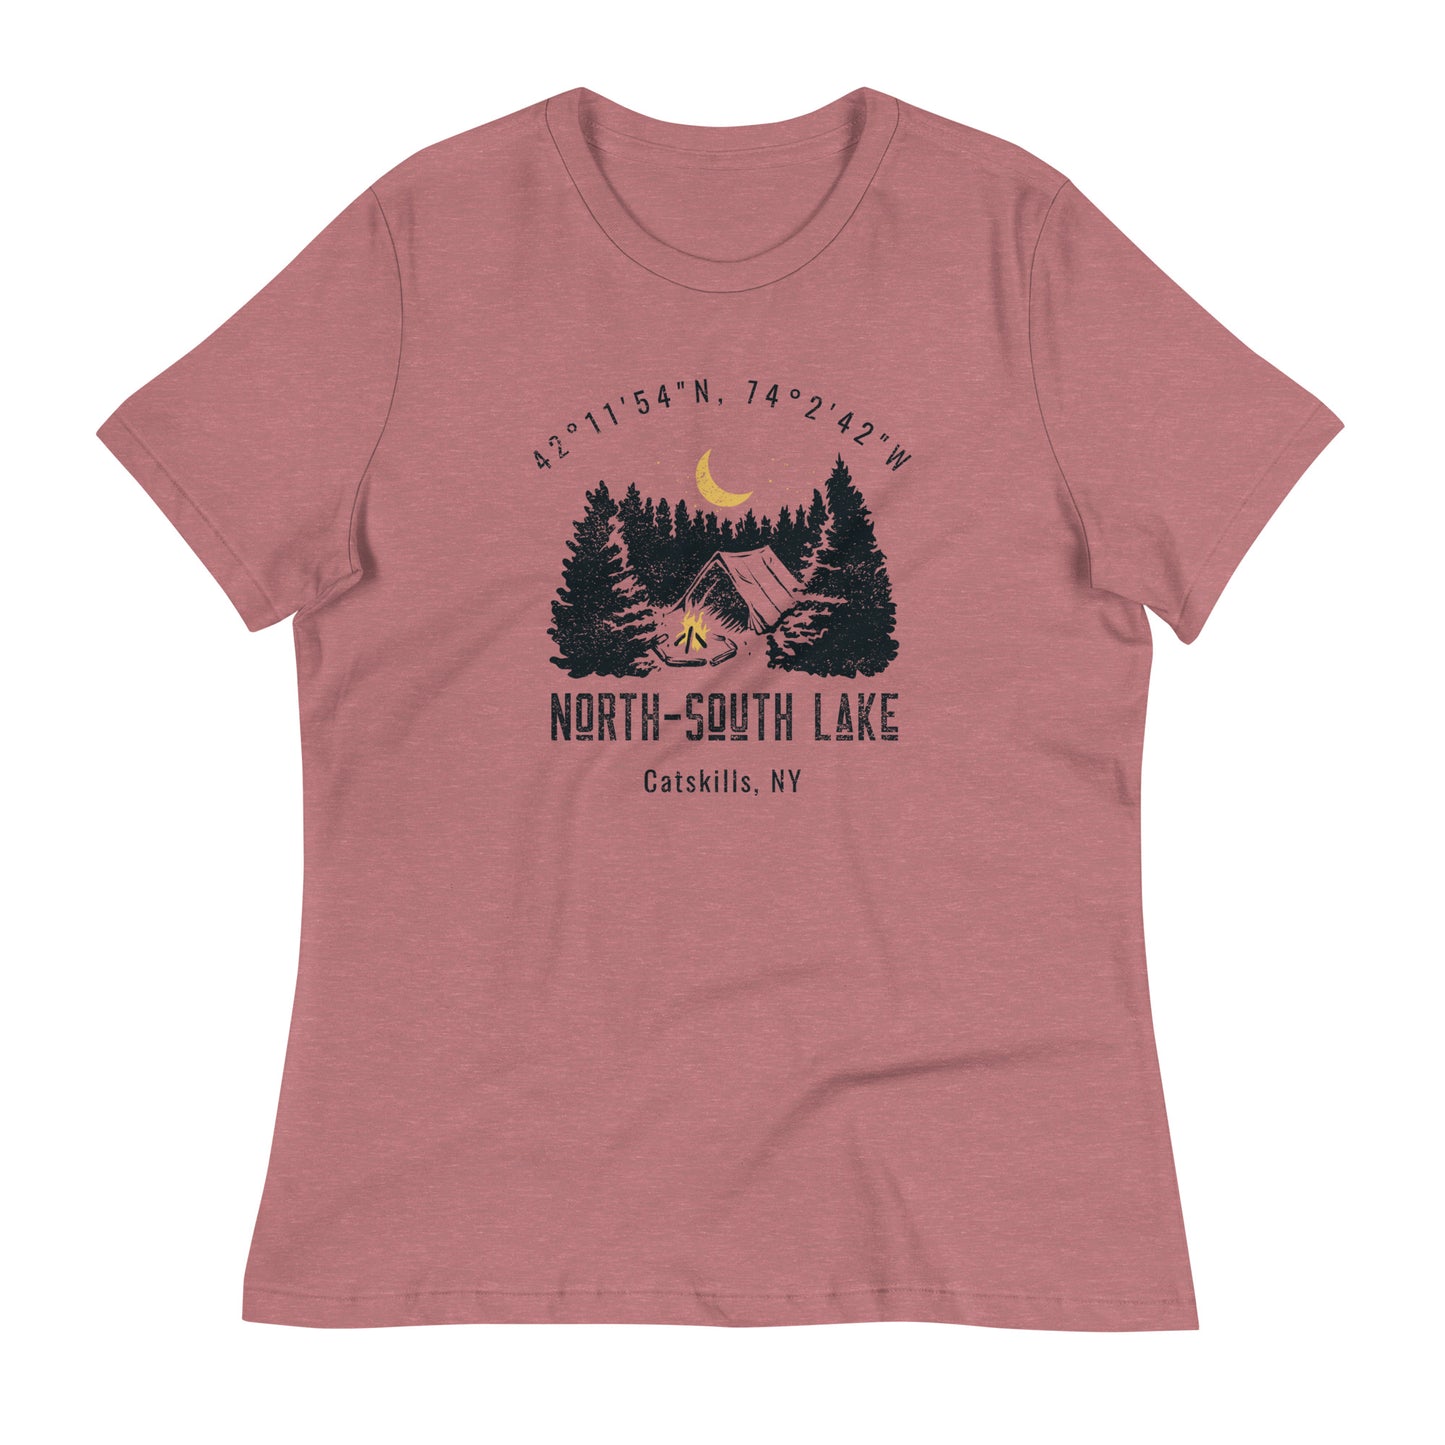 North-South Lake T-Shirt - Women’s